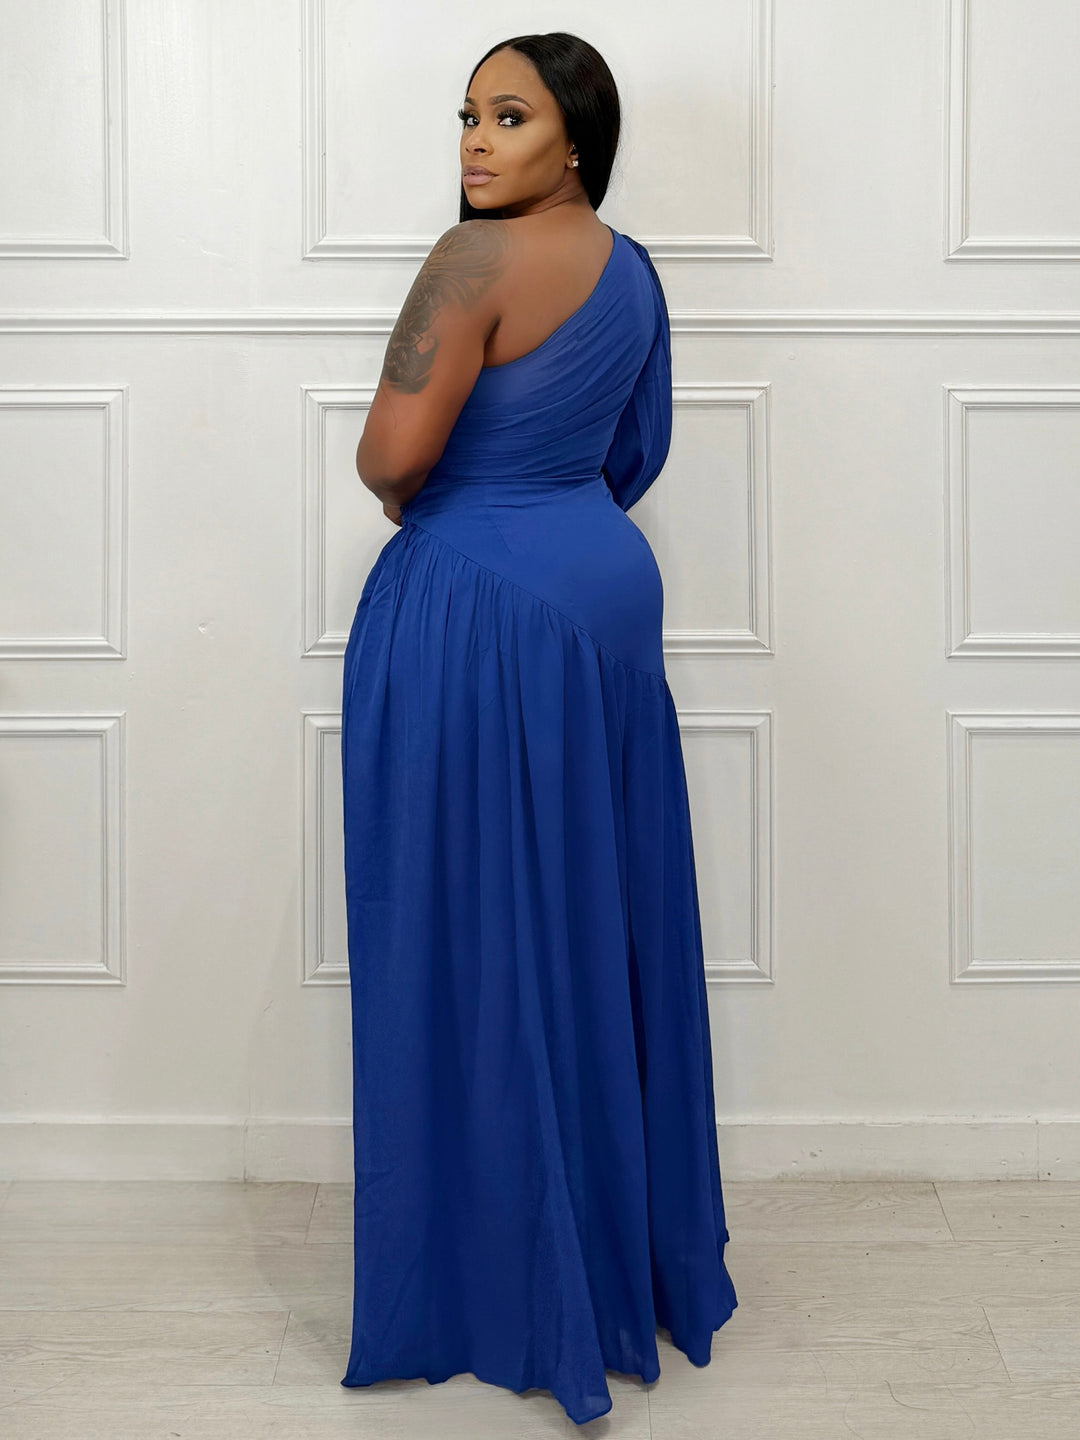 Top Trend One Sleeve & Slit Maxi Dress (Royal Blue)